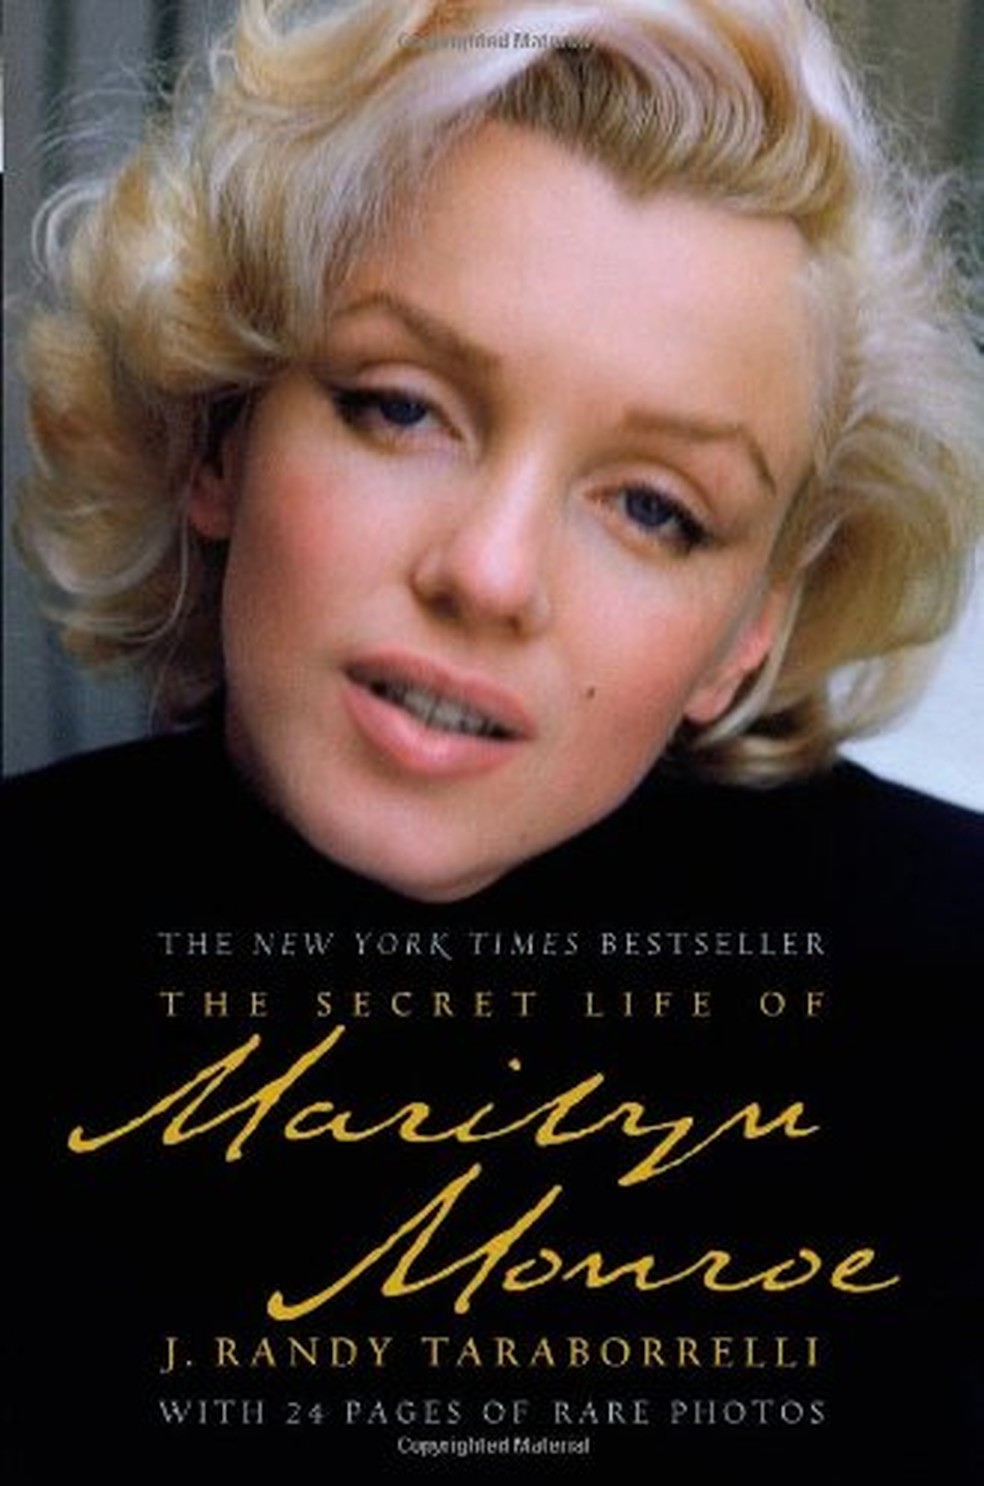 The Secret Life of Marilyn Monroe, por J. Randy Taraborrelli — Foto: Reprodução/ Amazon